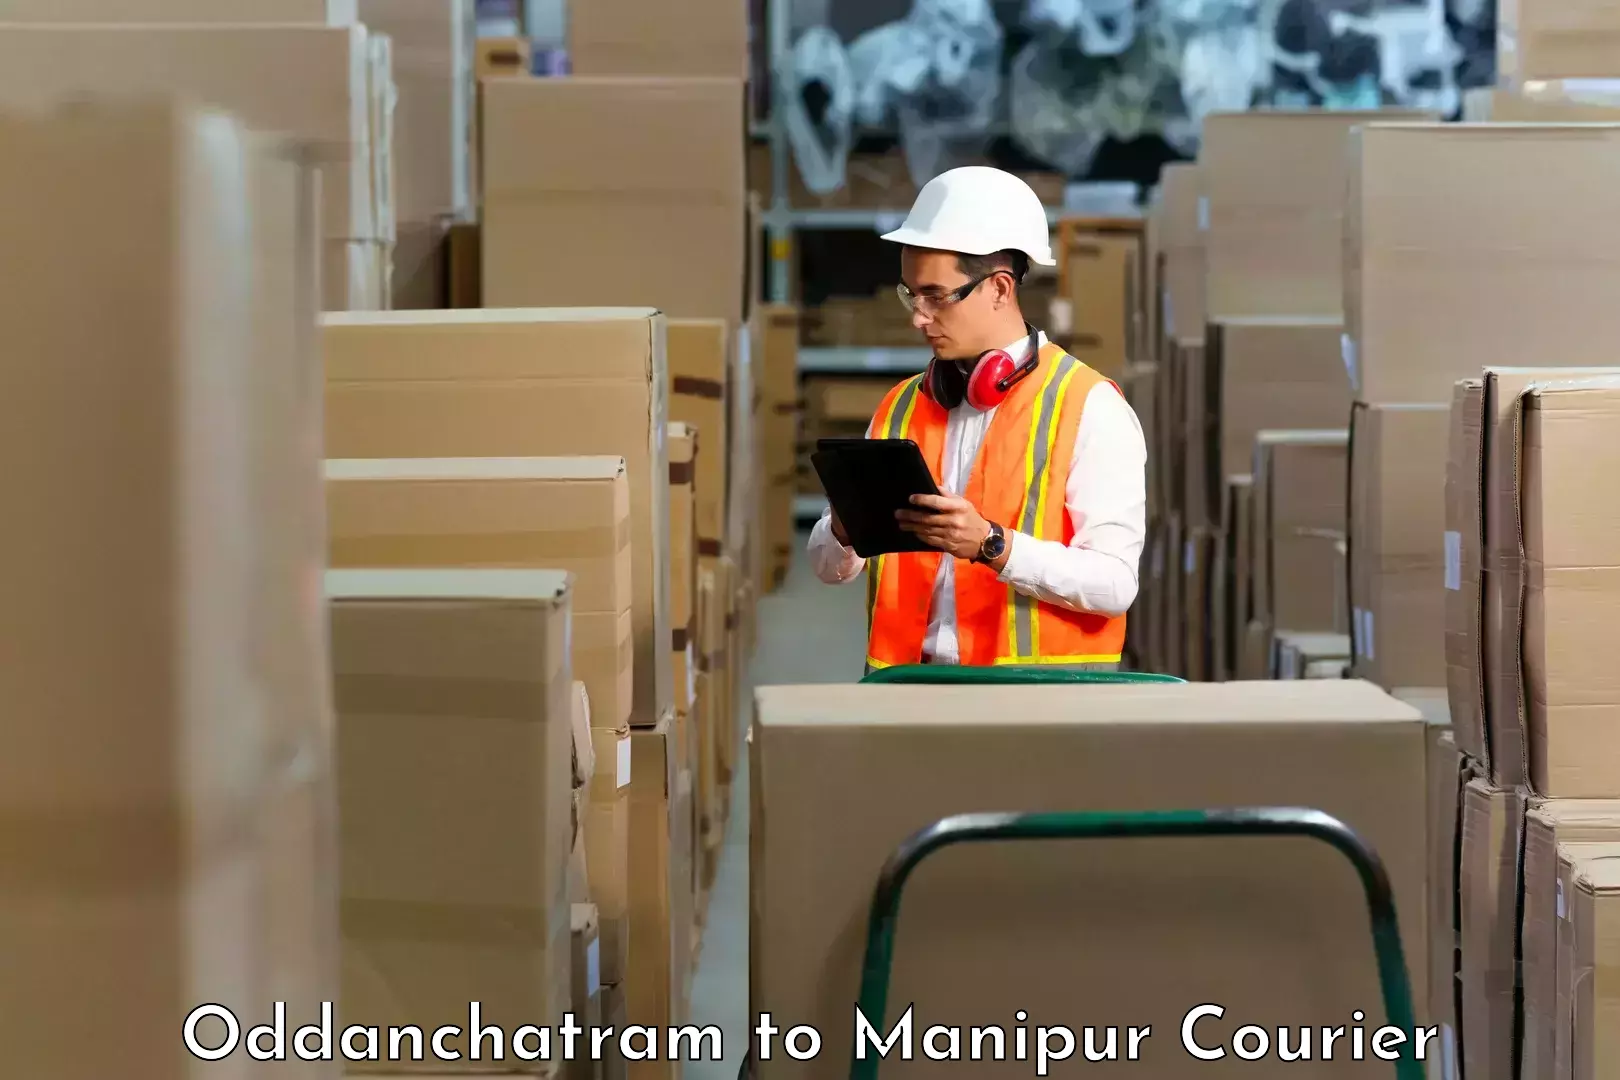 High-speed parcel service Oddanchatram to Manipur